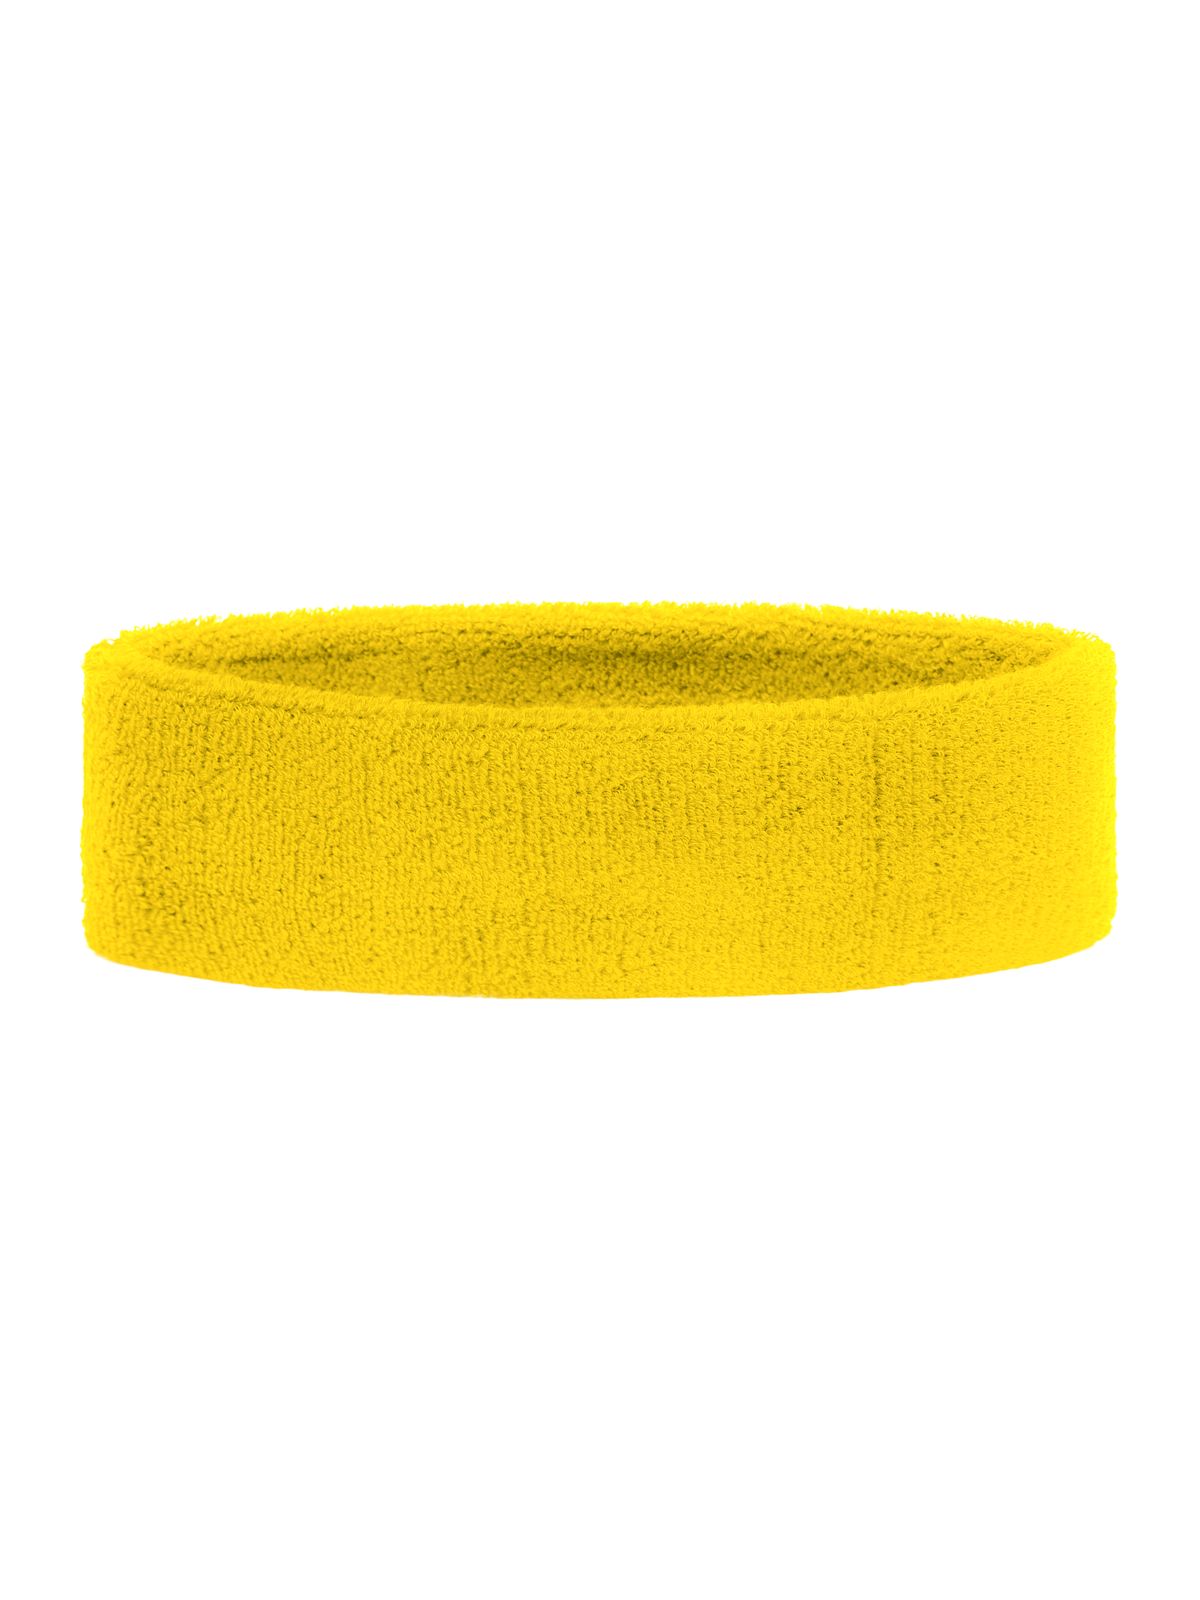 terry-headband-gold-yellow.webp